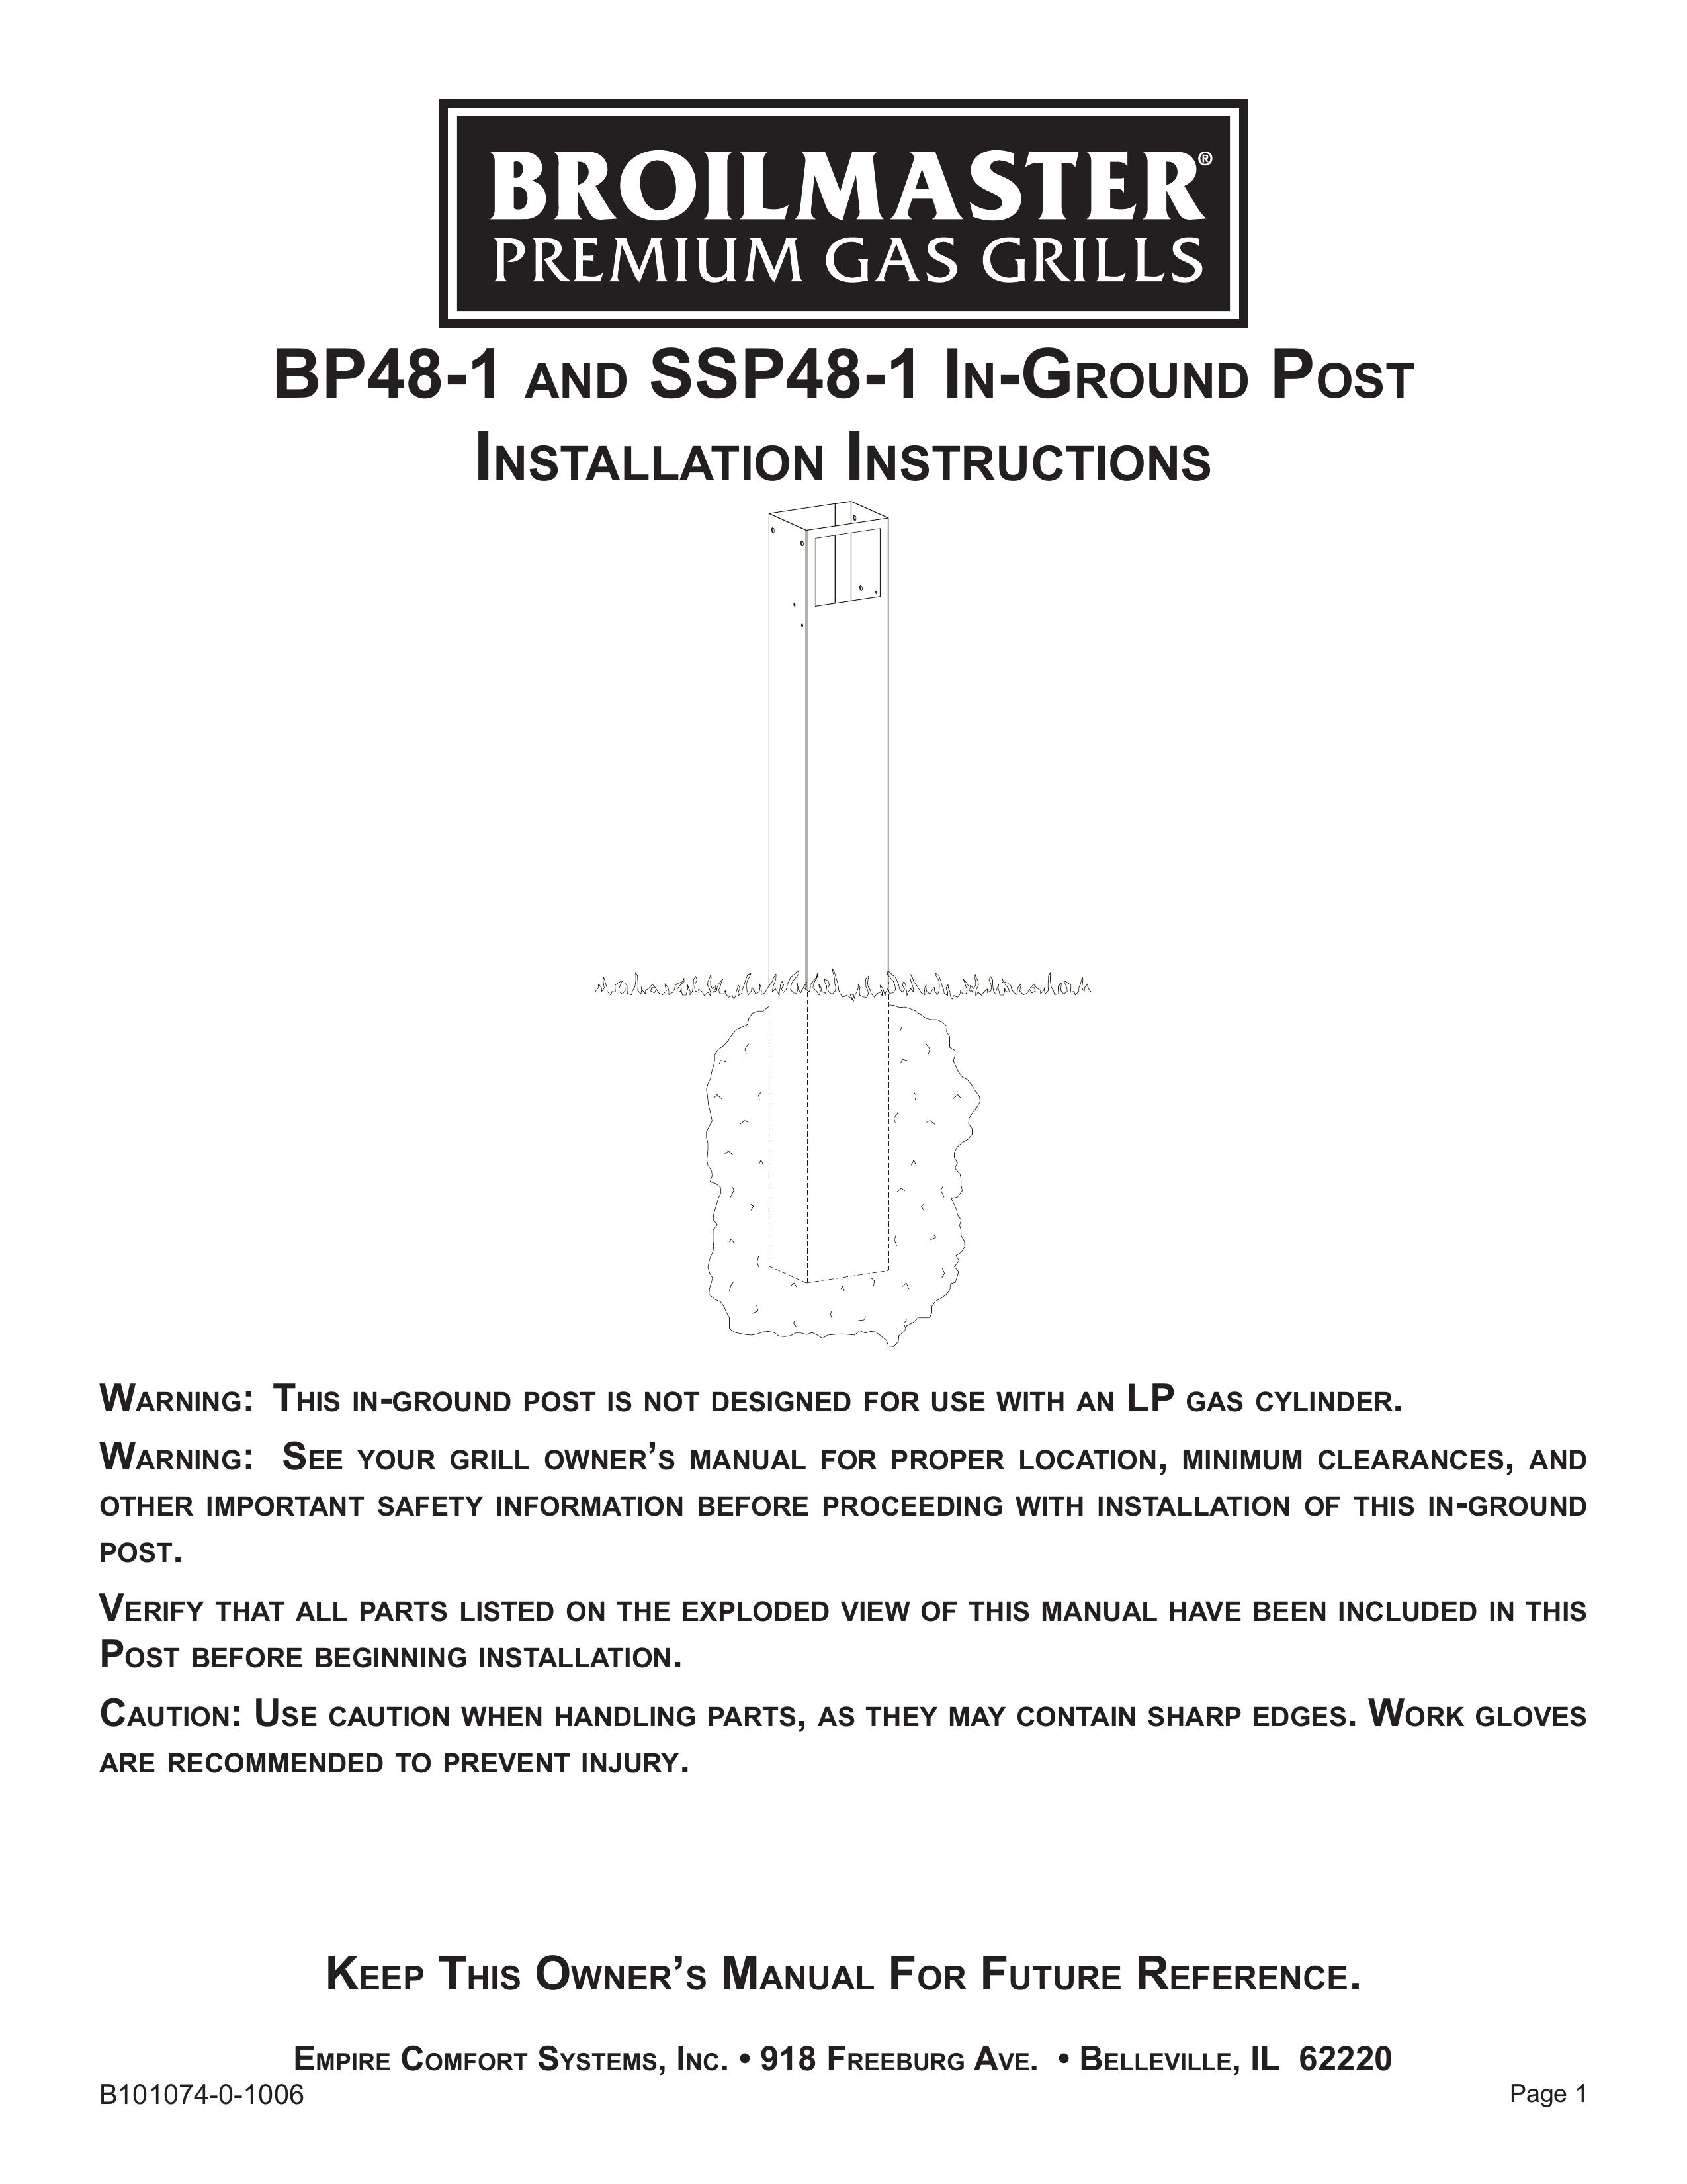 Broilmaster BP48-1 Gas Grill User Manual